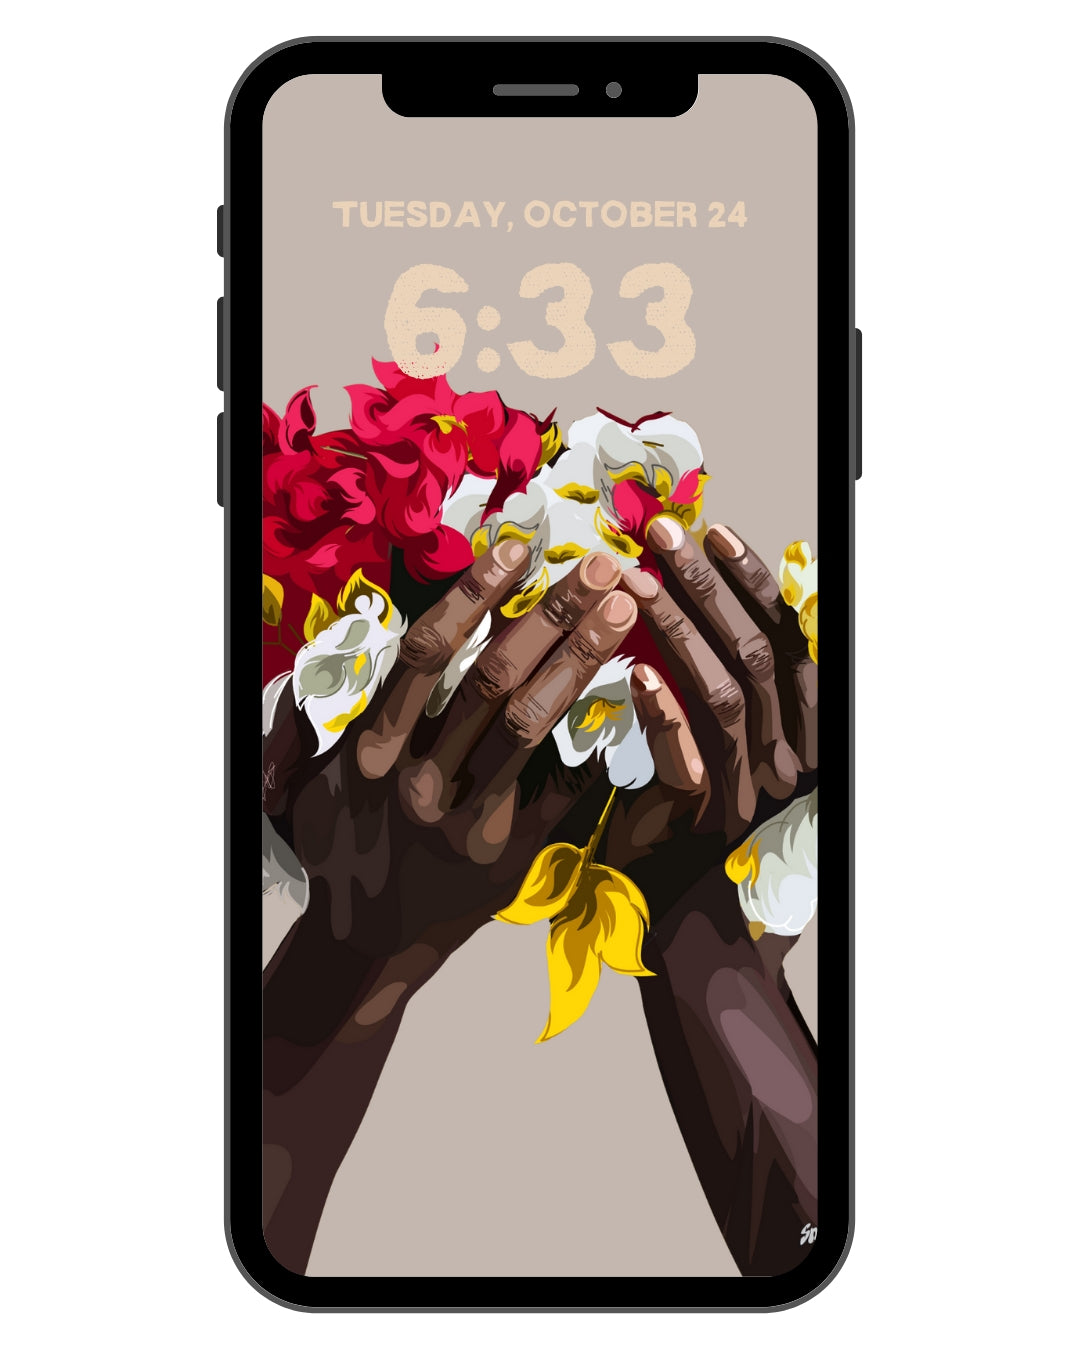 Fleurs - Phone Screensaver